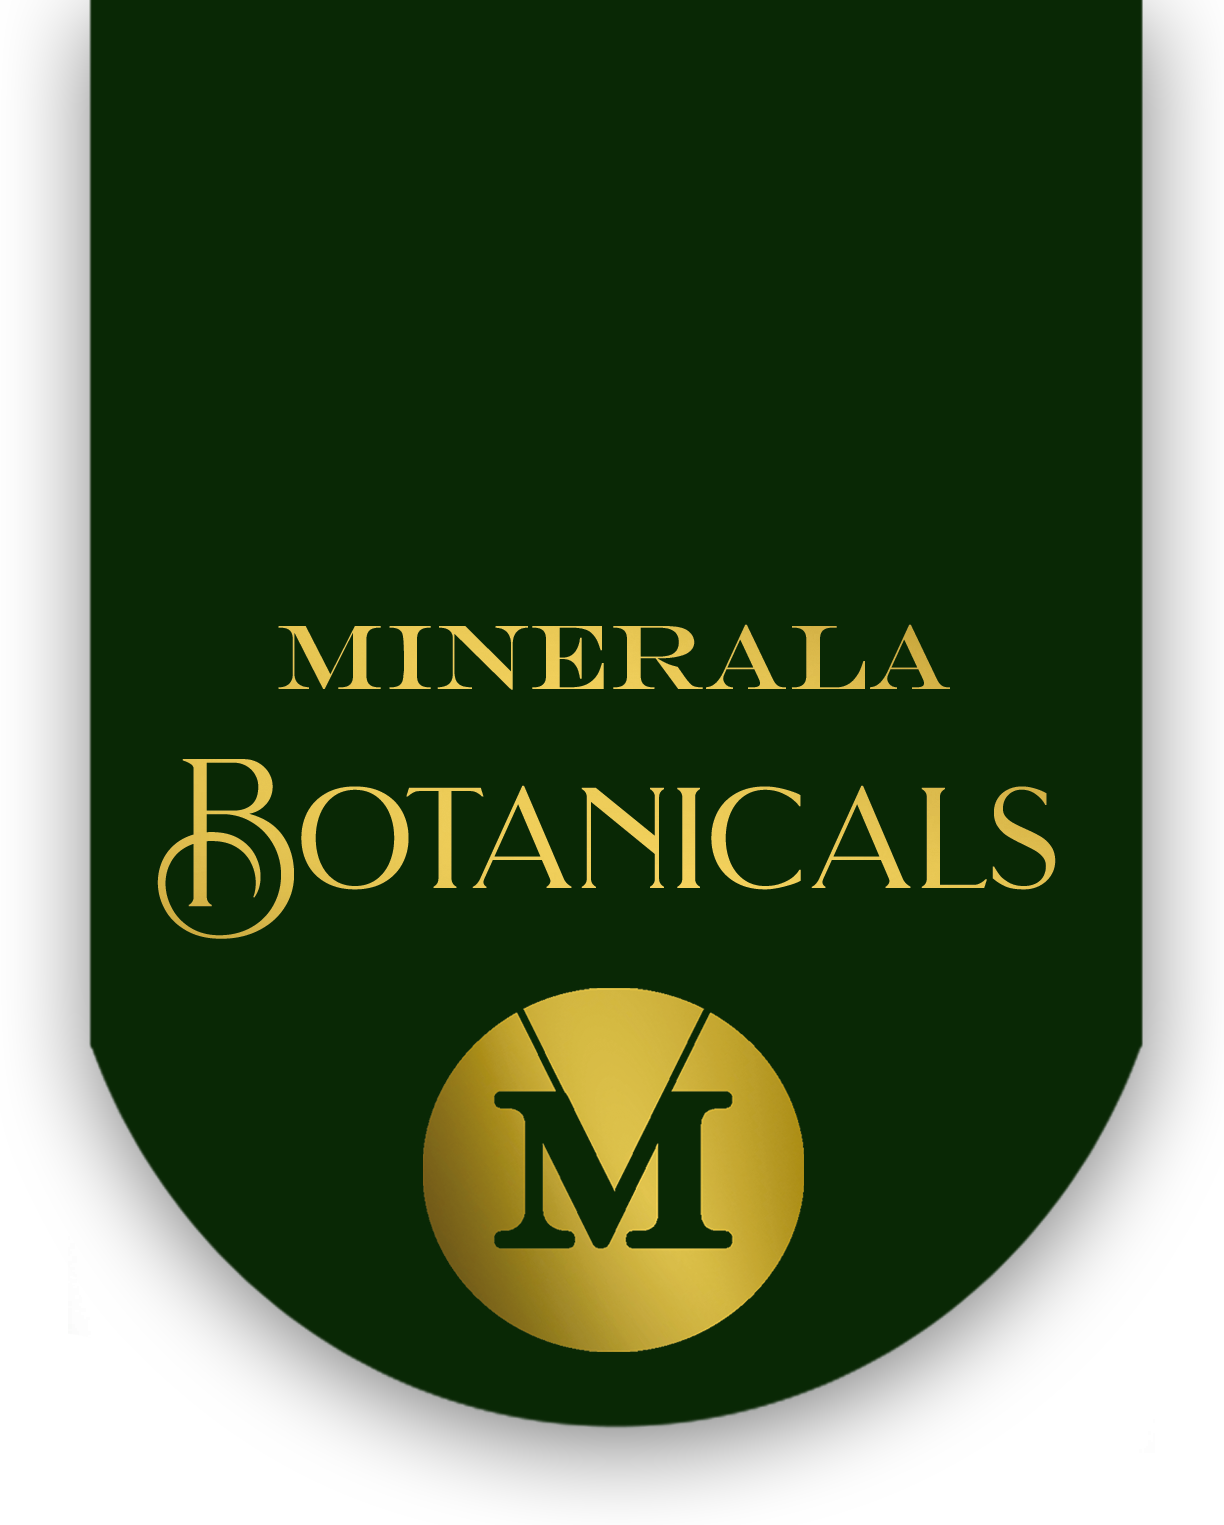 Minerala-Botanicals met schaduw achtergrond-bakingsoda nl Nistelrode